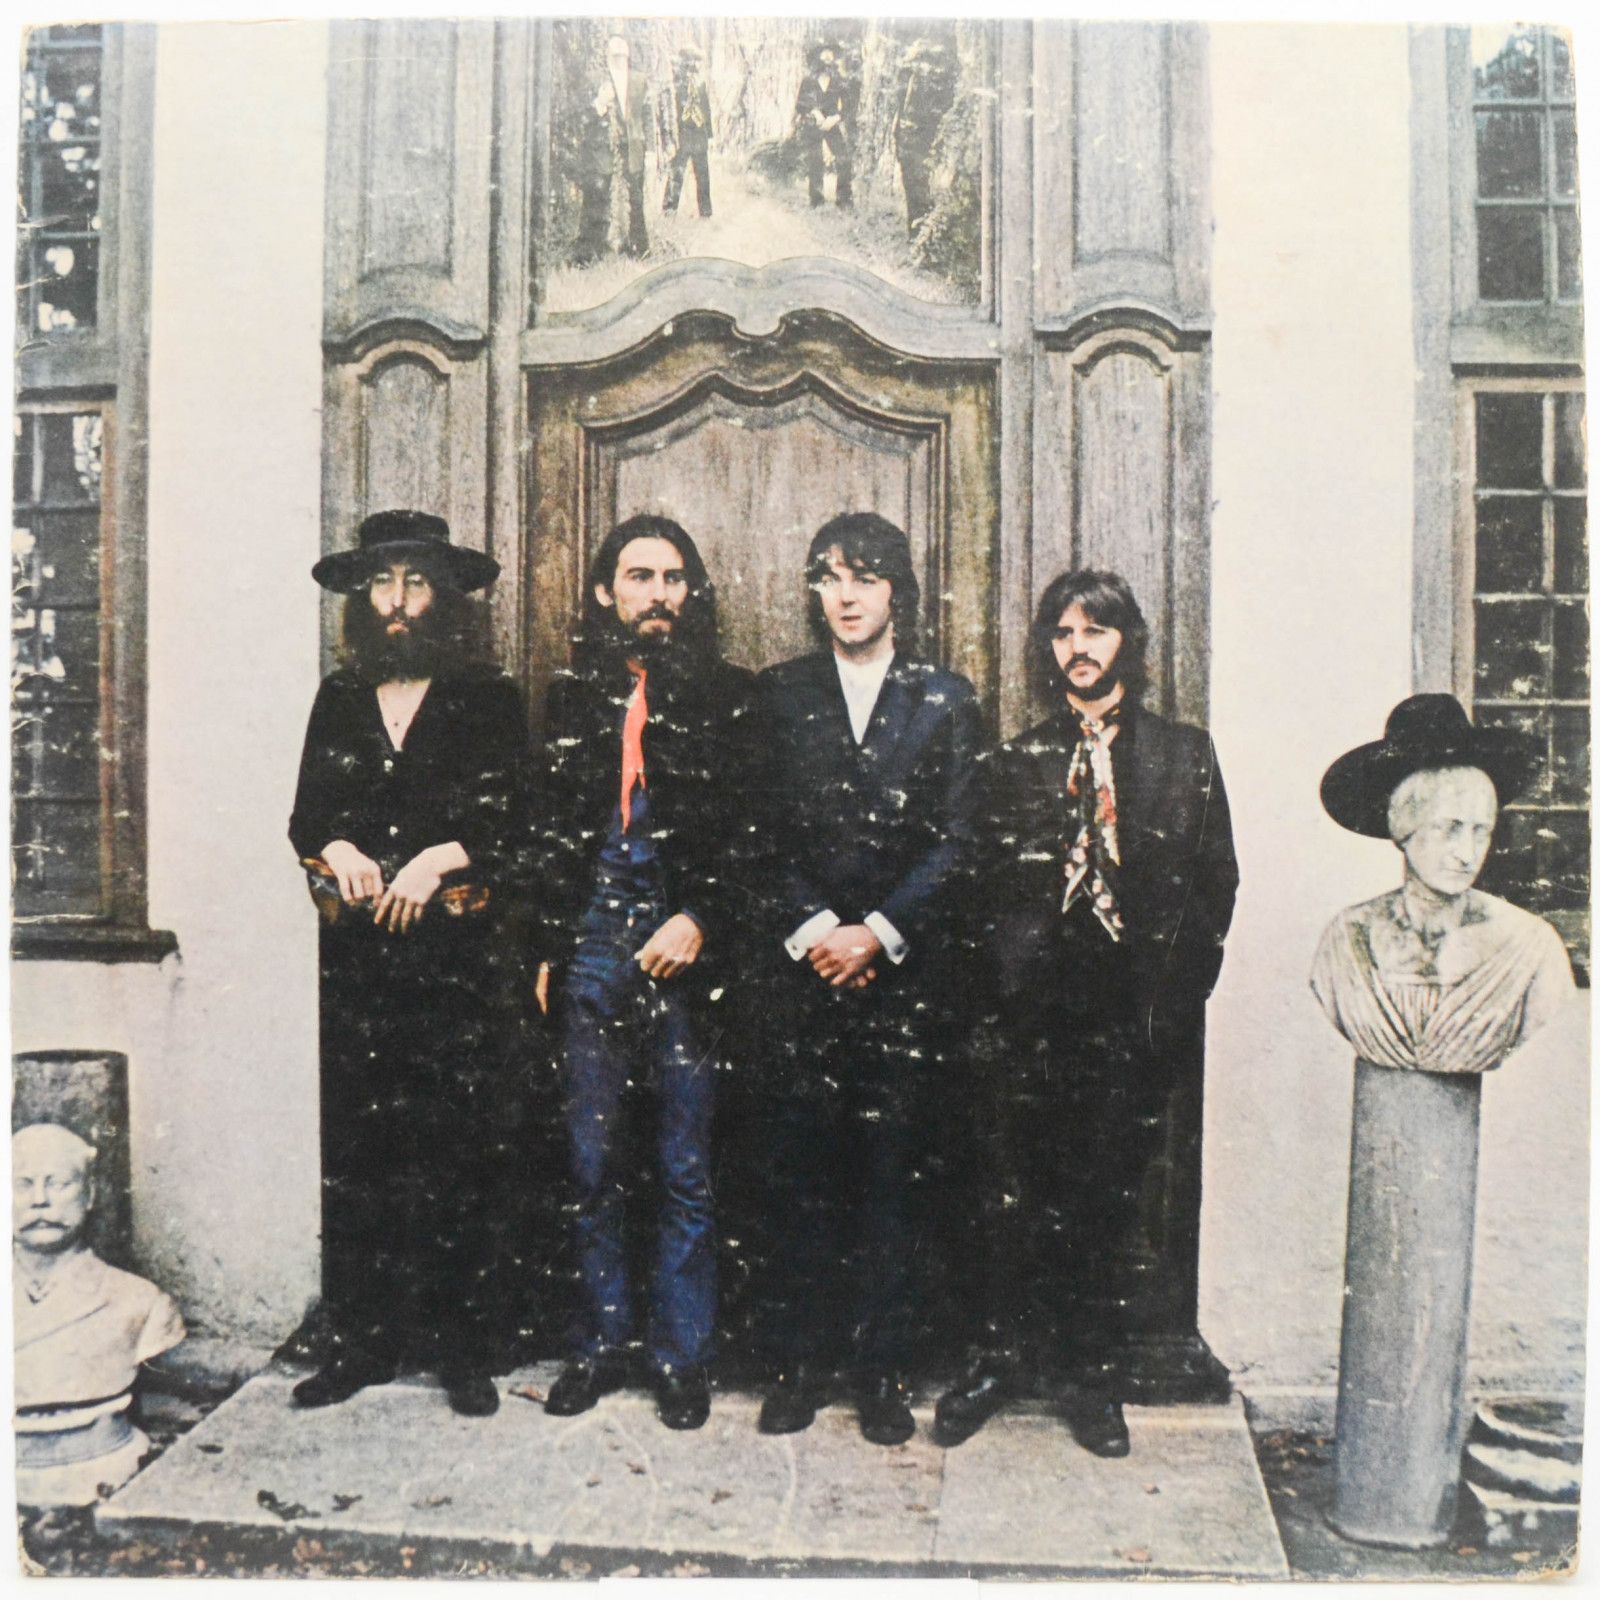 Beatles — Hey Jude (The Beatles Again) (USA), 1970